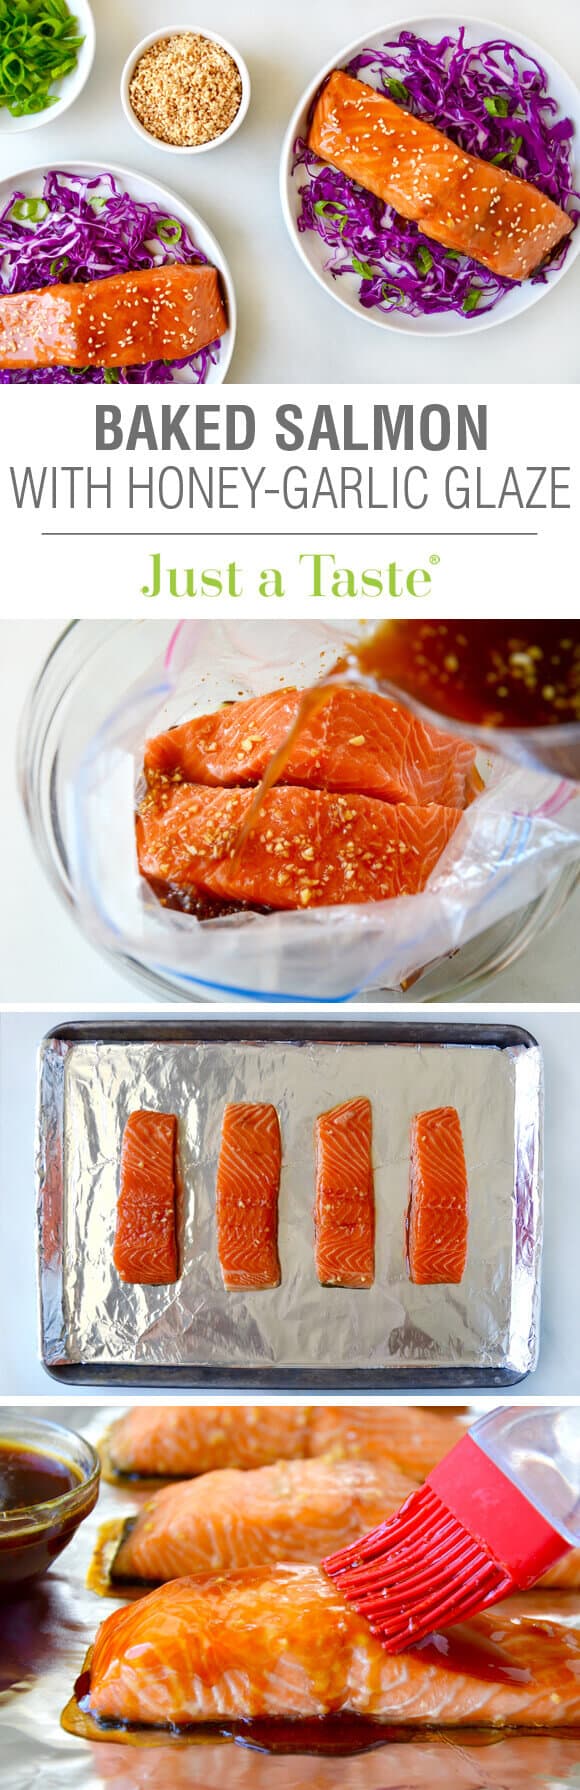 Baked Salmon with Honey-Garlic Glaze Recipe